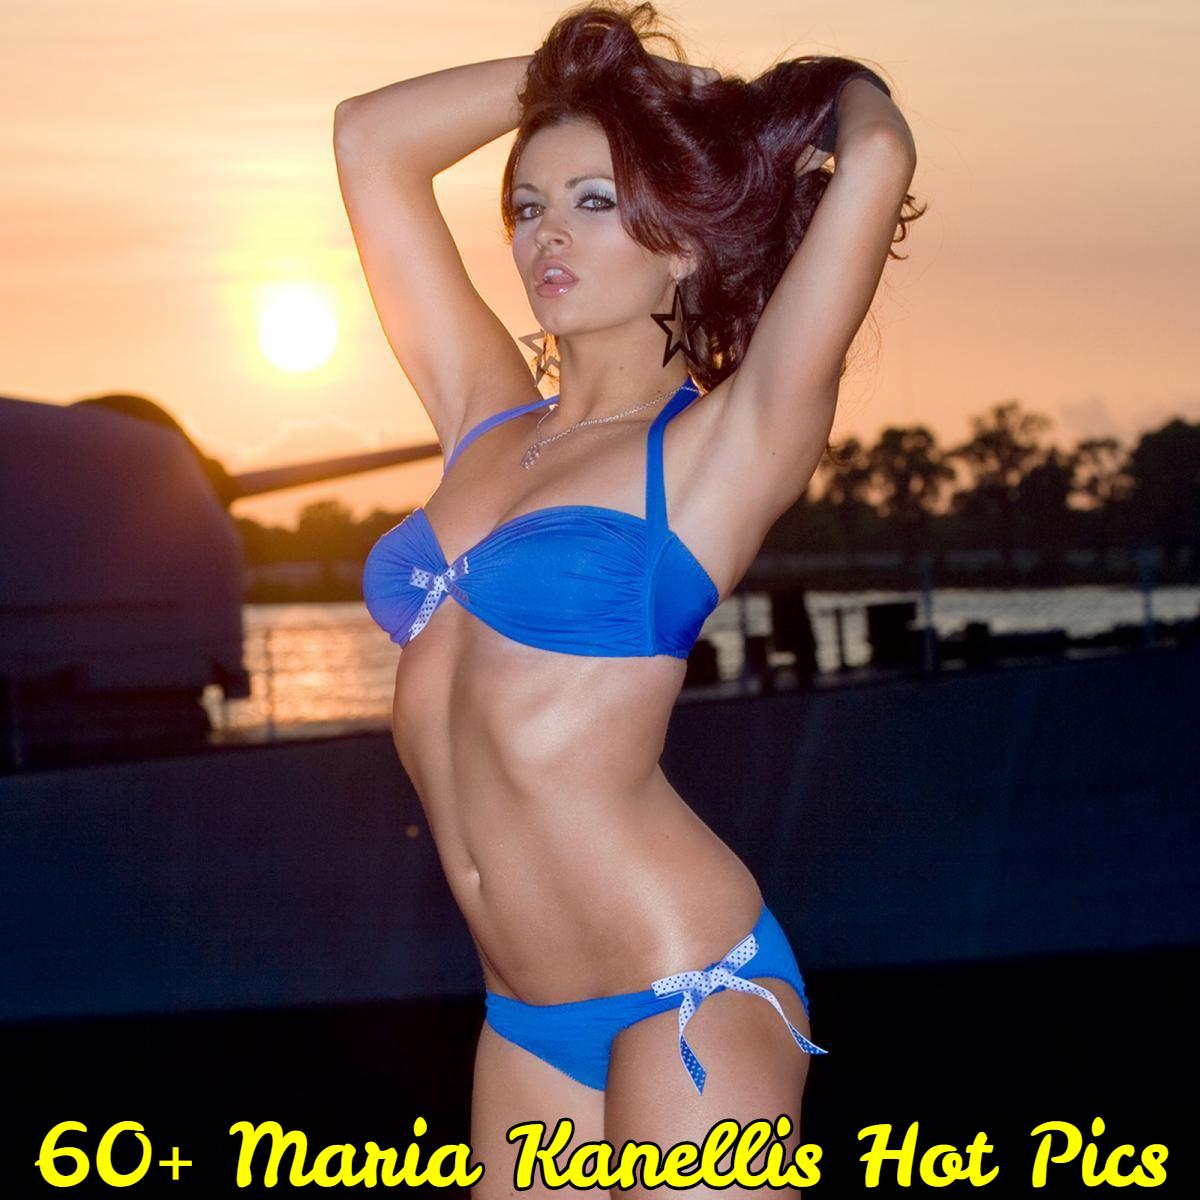 maria kanellis hot pics